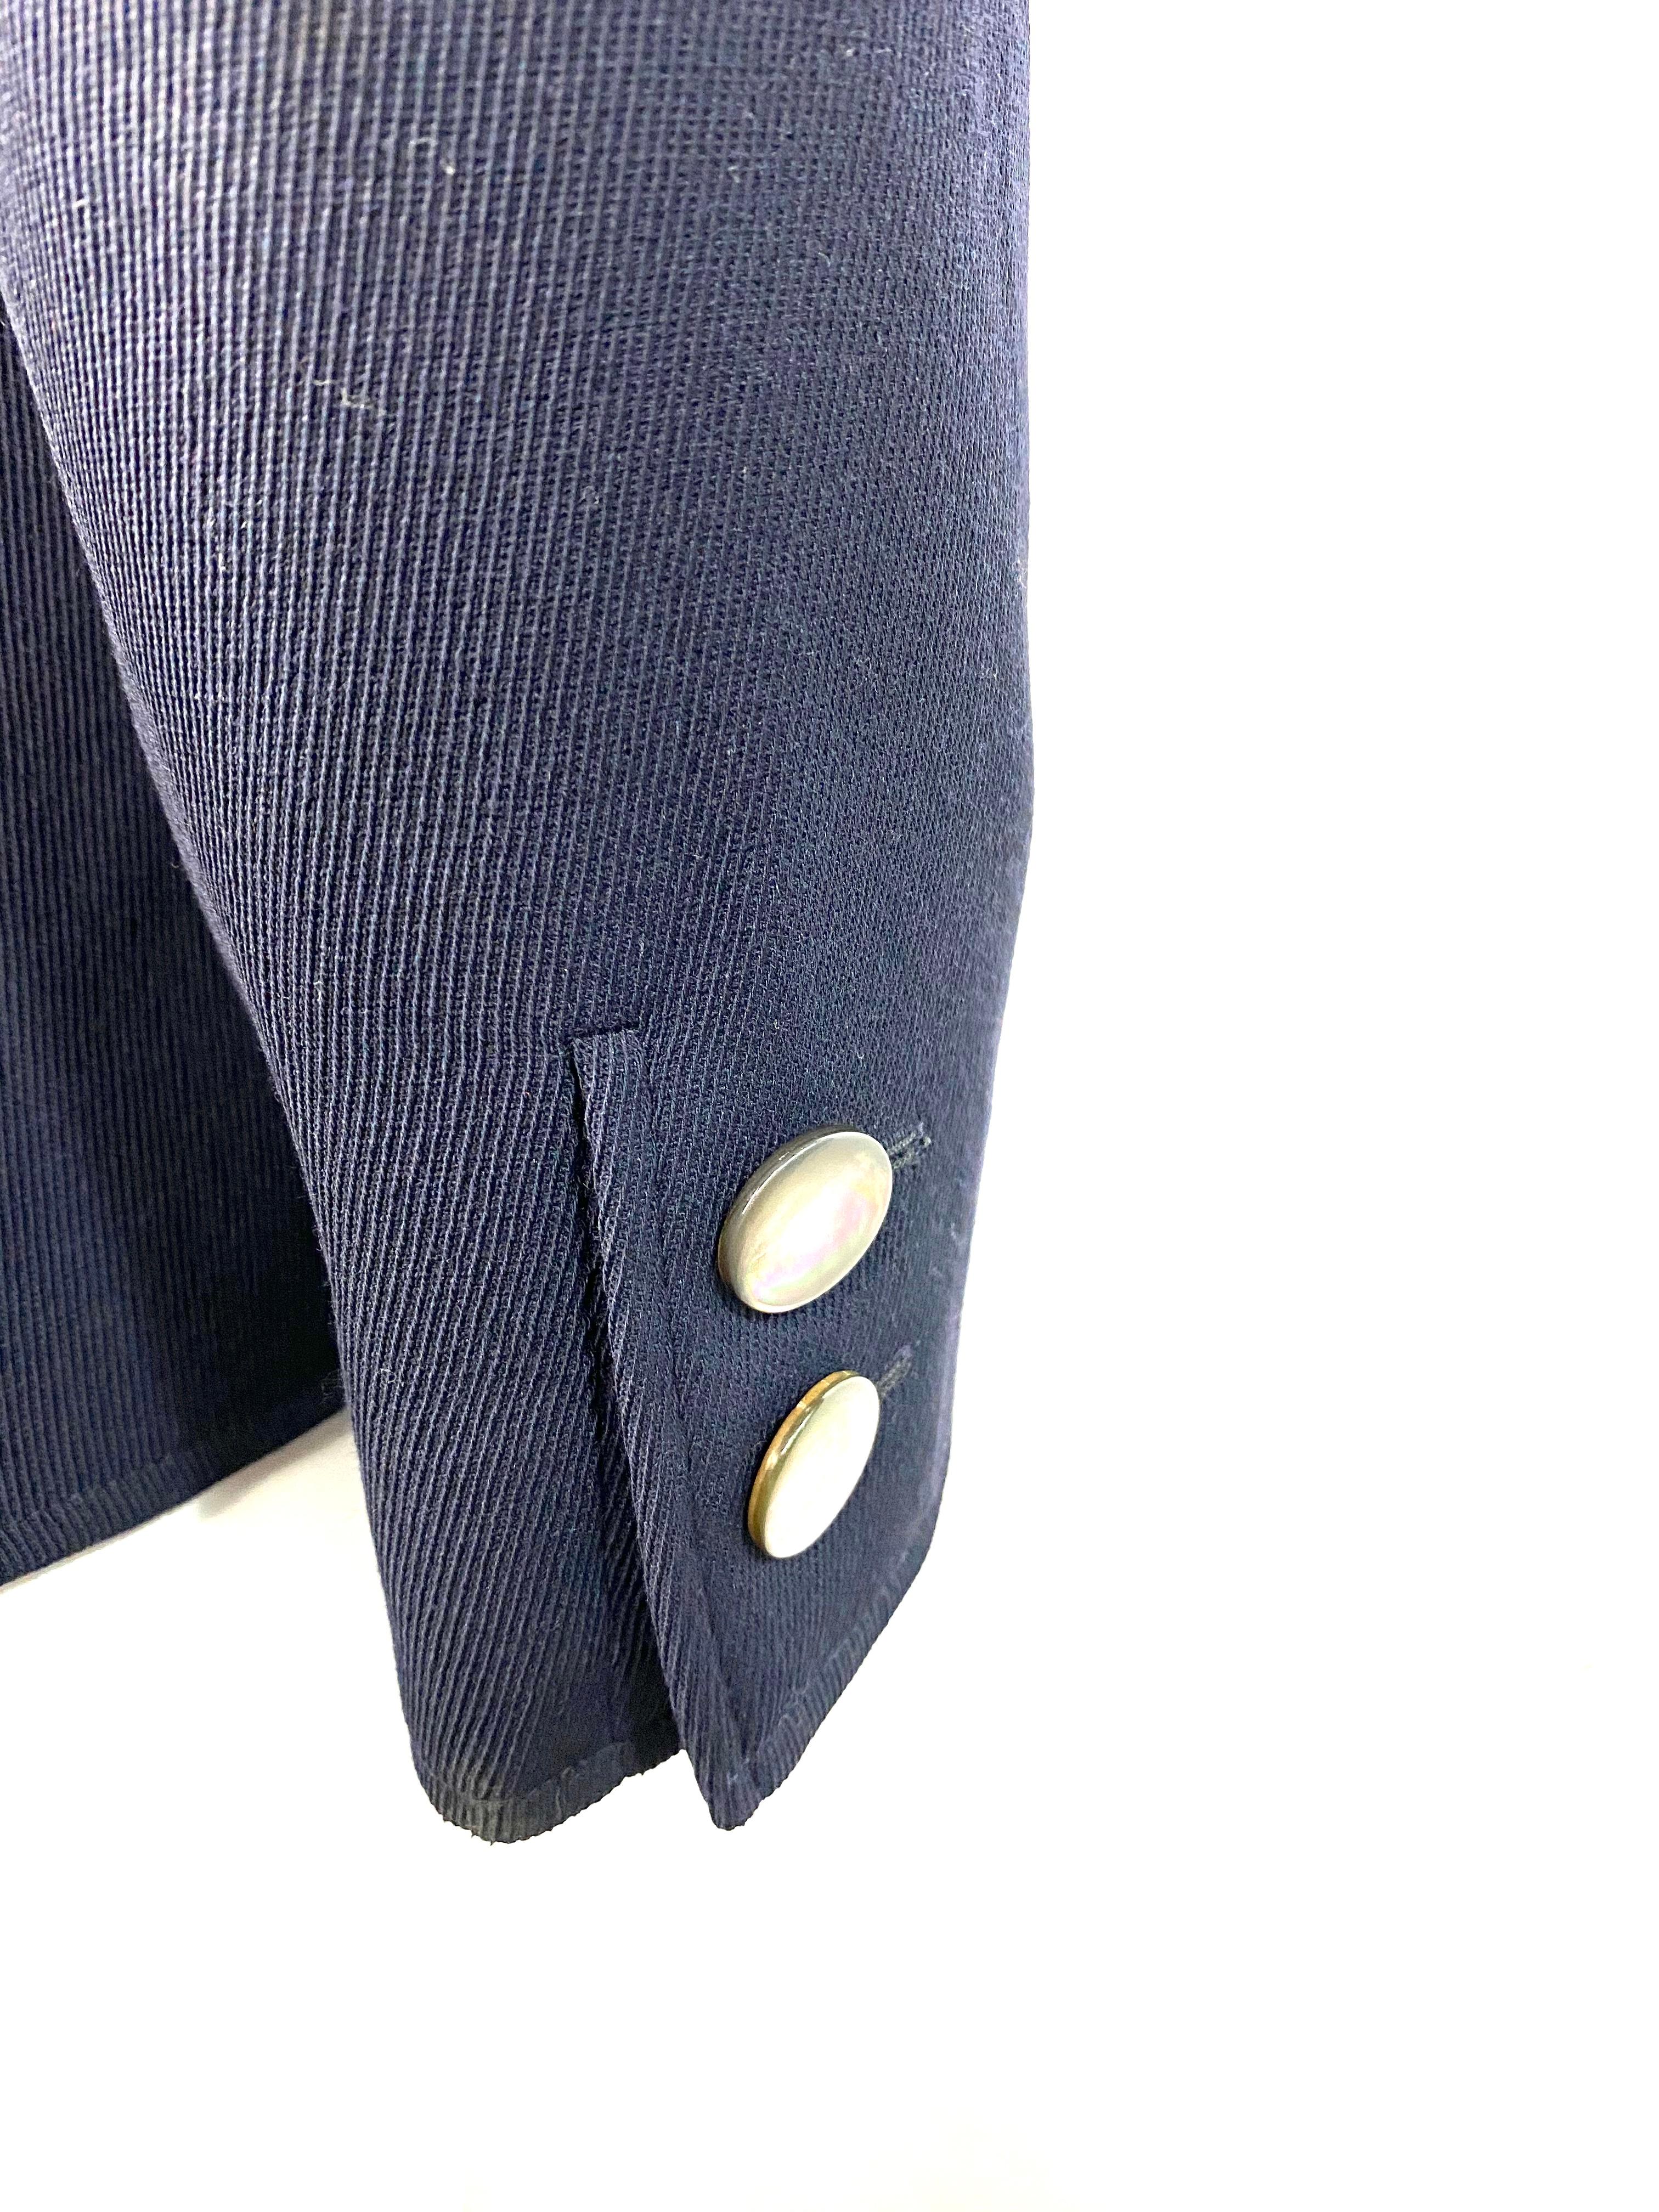 Valentino Boutique Navy Blazer Jacket Size 6 For Sale 4